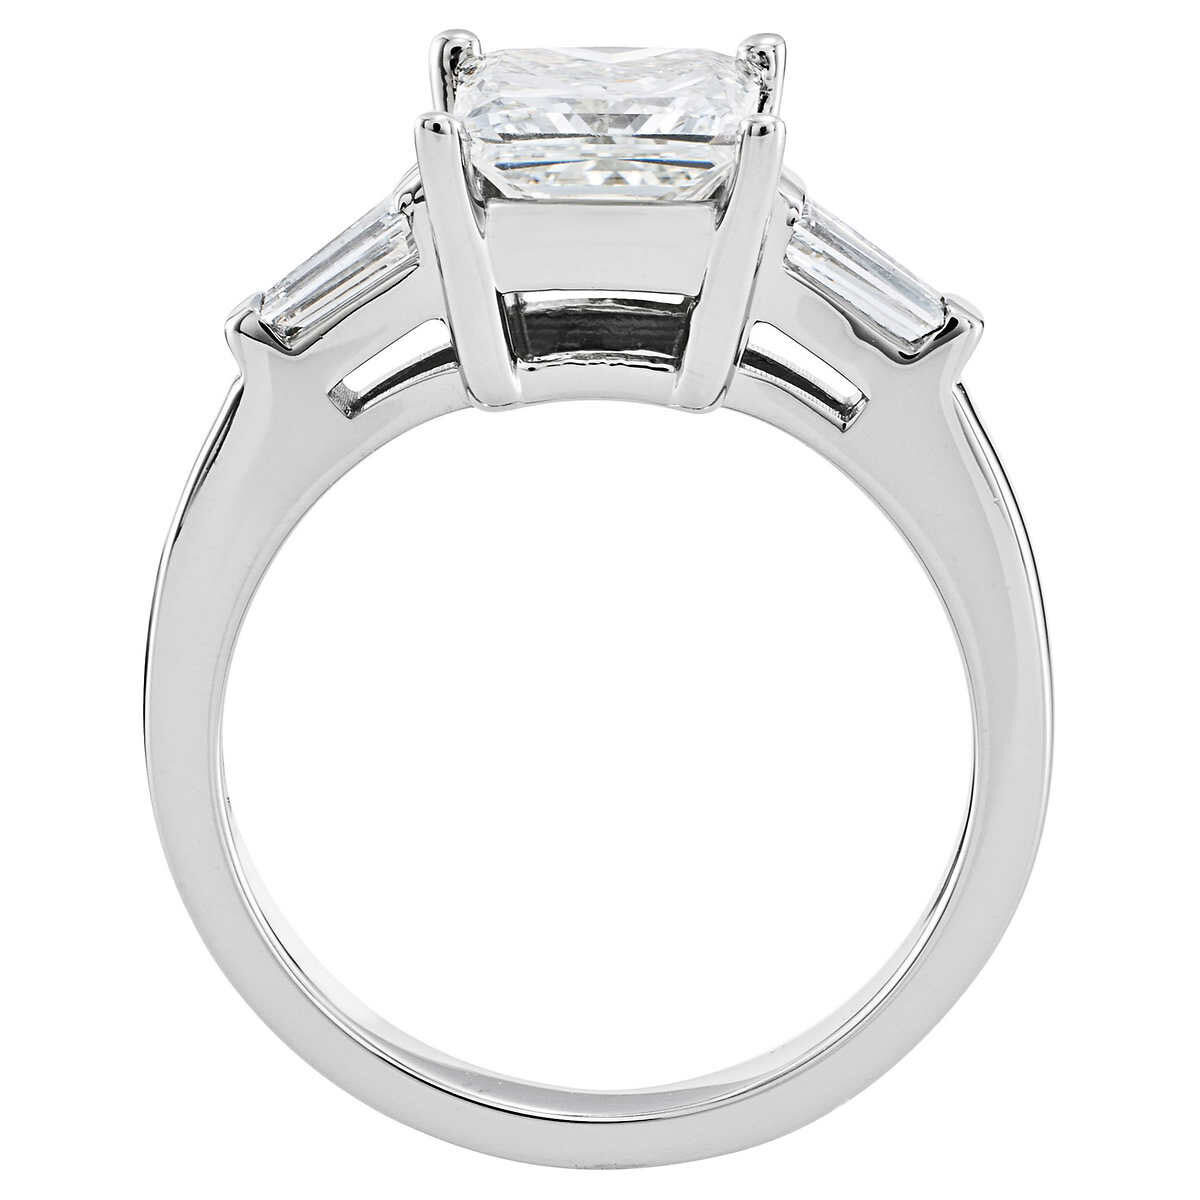 3.75ctw Princess Cut Diamond Baguette Ring